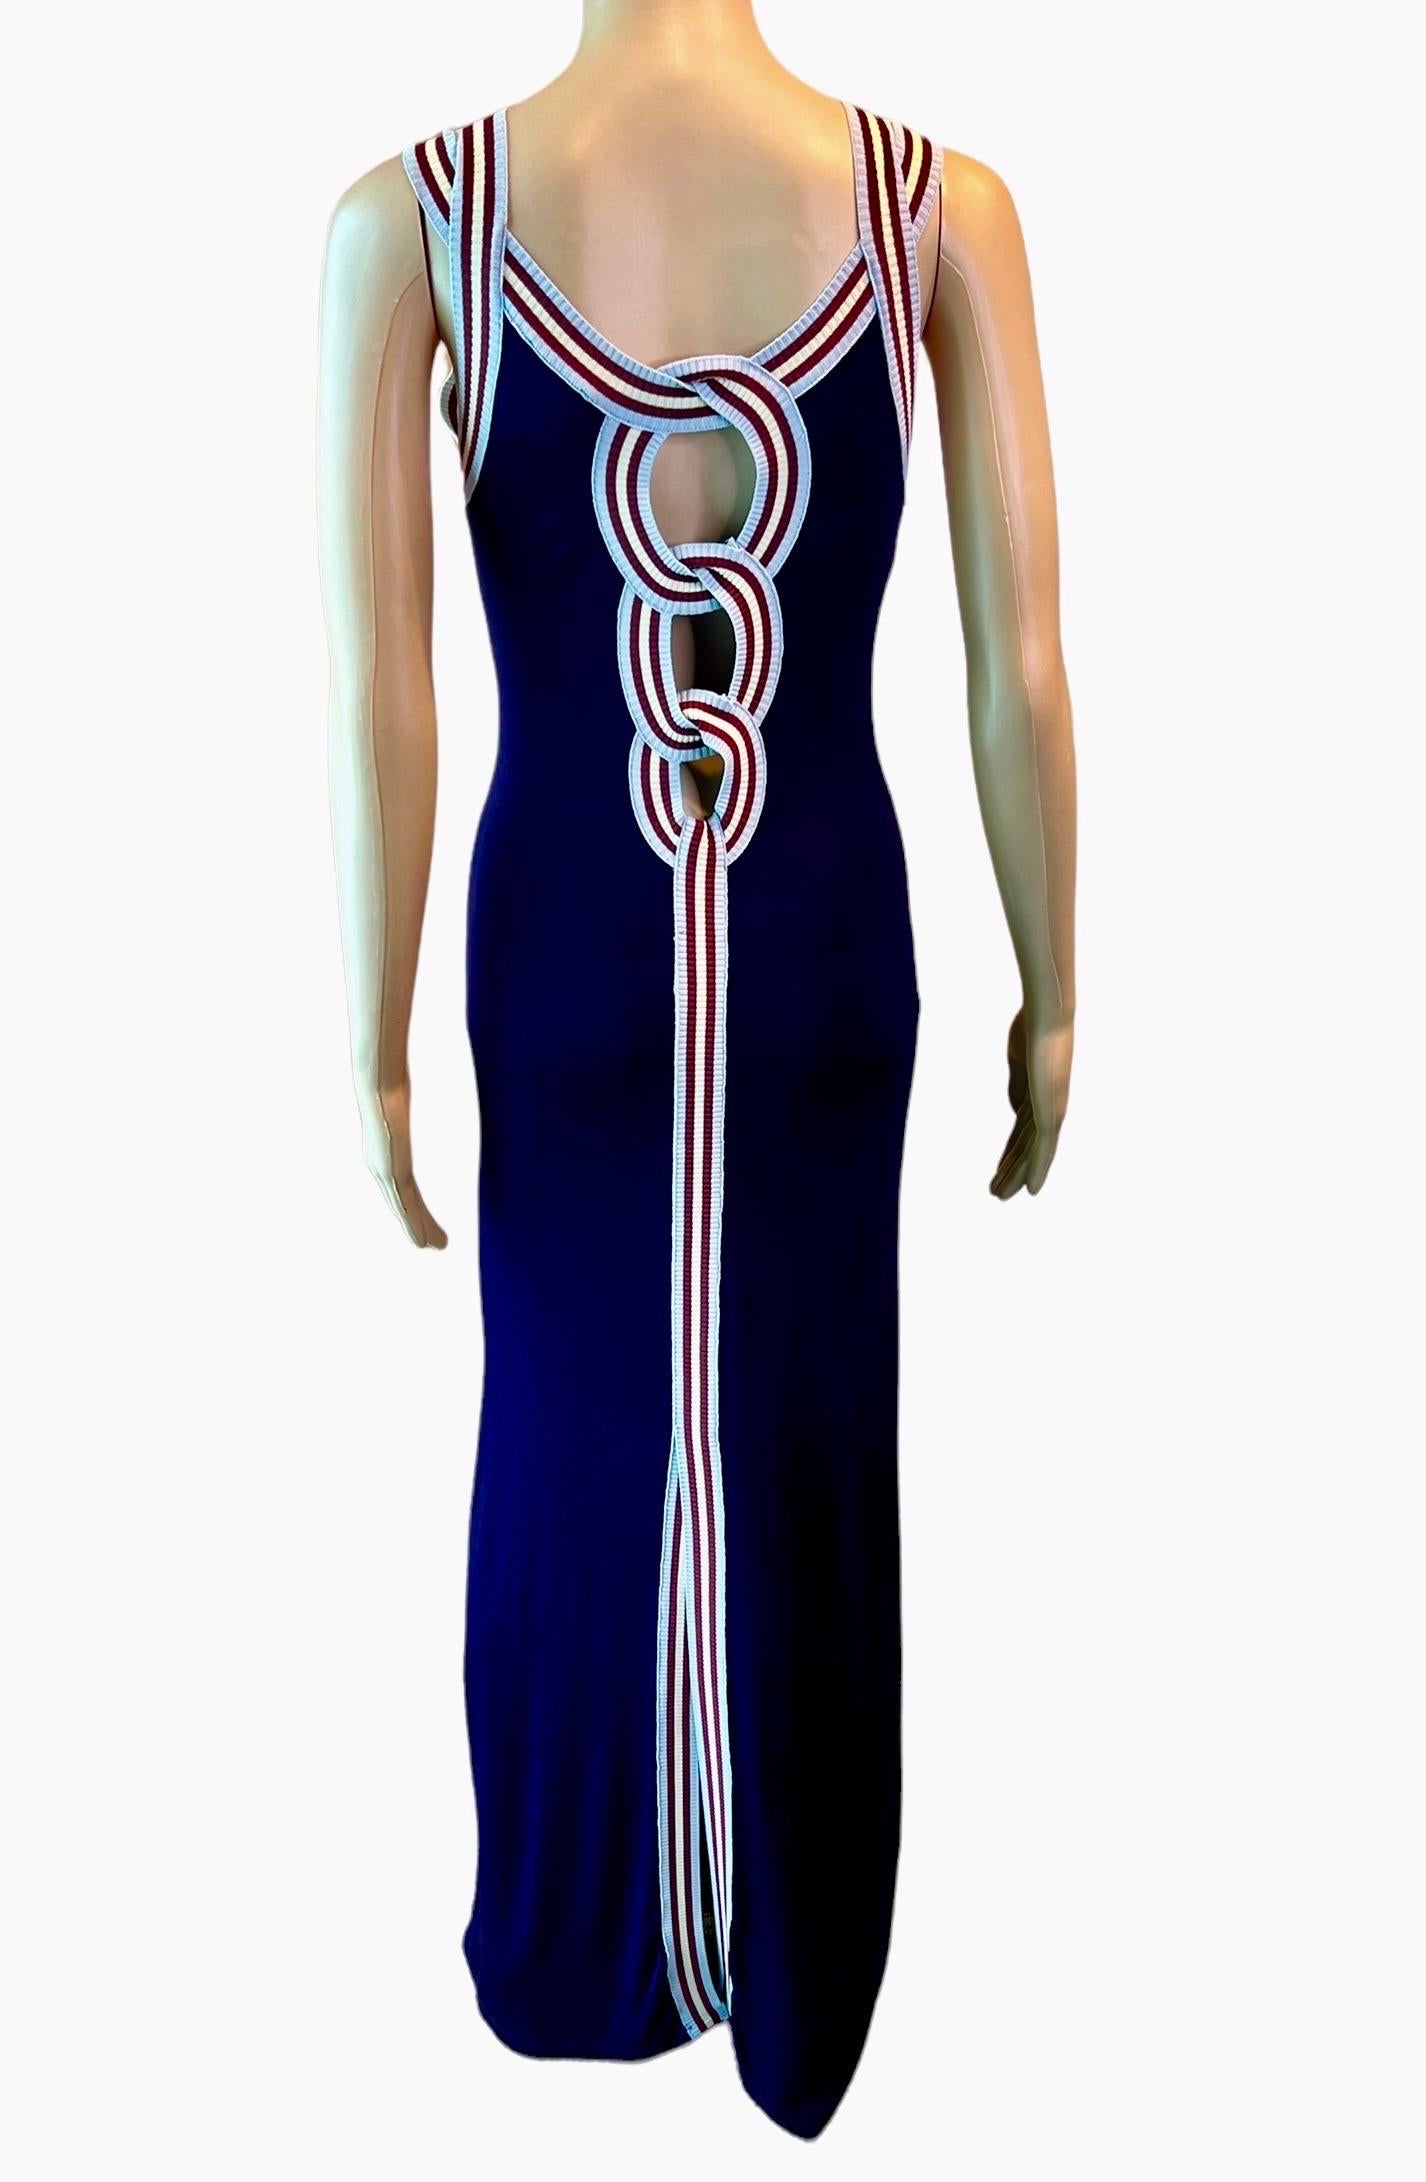 Jean Paul Gaultier S/S 2007 Cutout Bodycon Maxi Dress For Sale 4